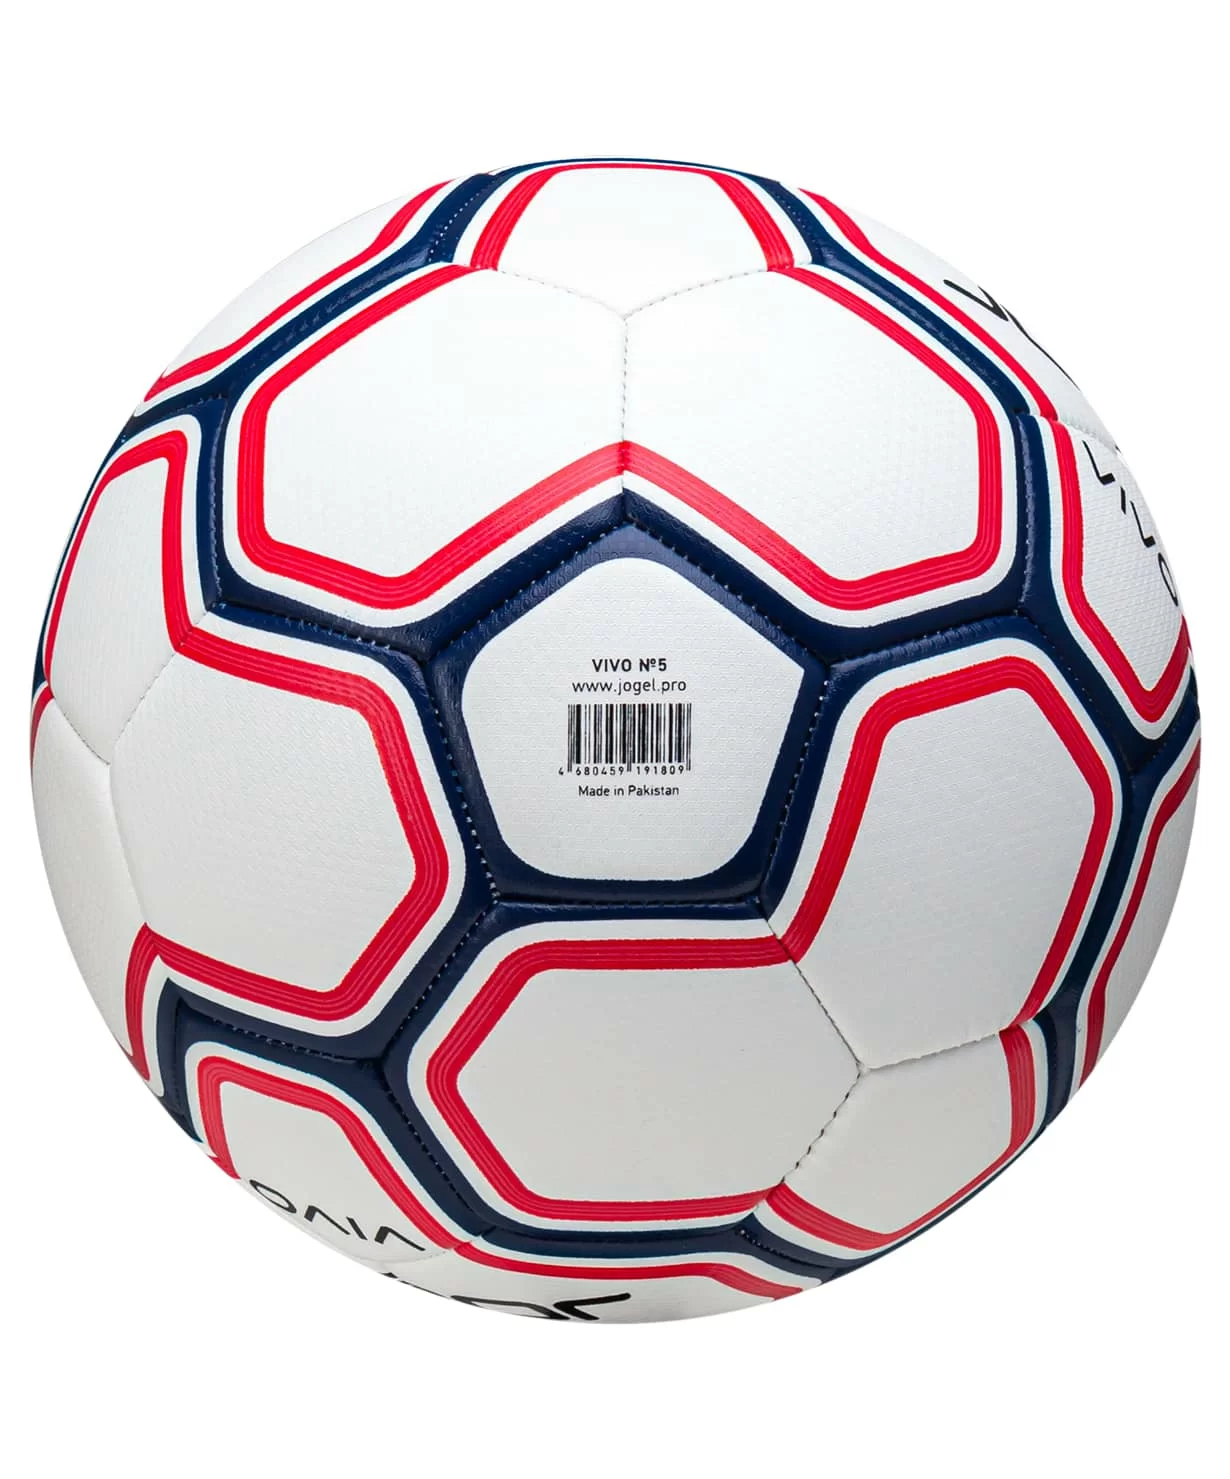 Фото Мяч футбольный Jögel Vivo №5 (BC23) ЦБ-00002040 со склада магазина СпортСЕ